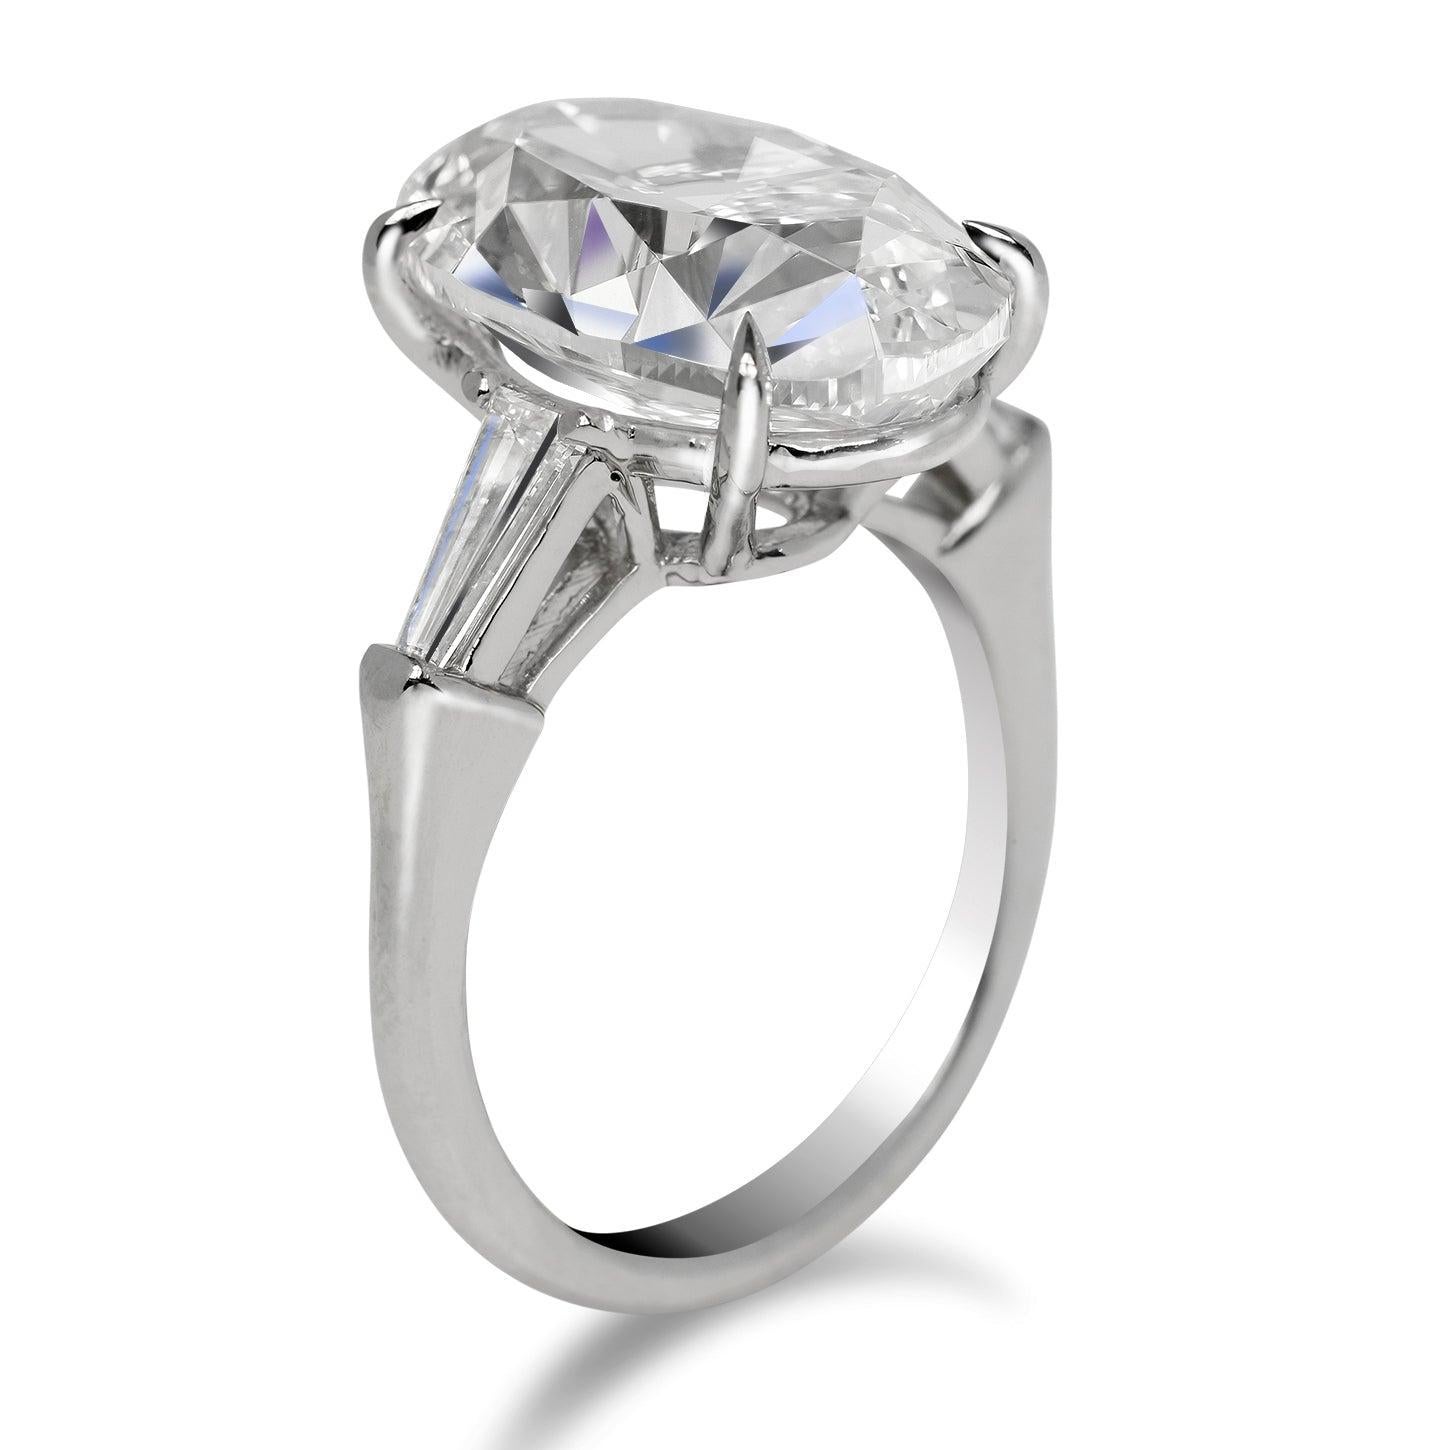 9 carat diamond engagement ring